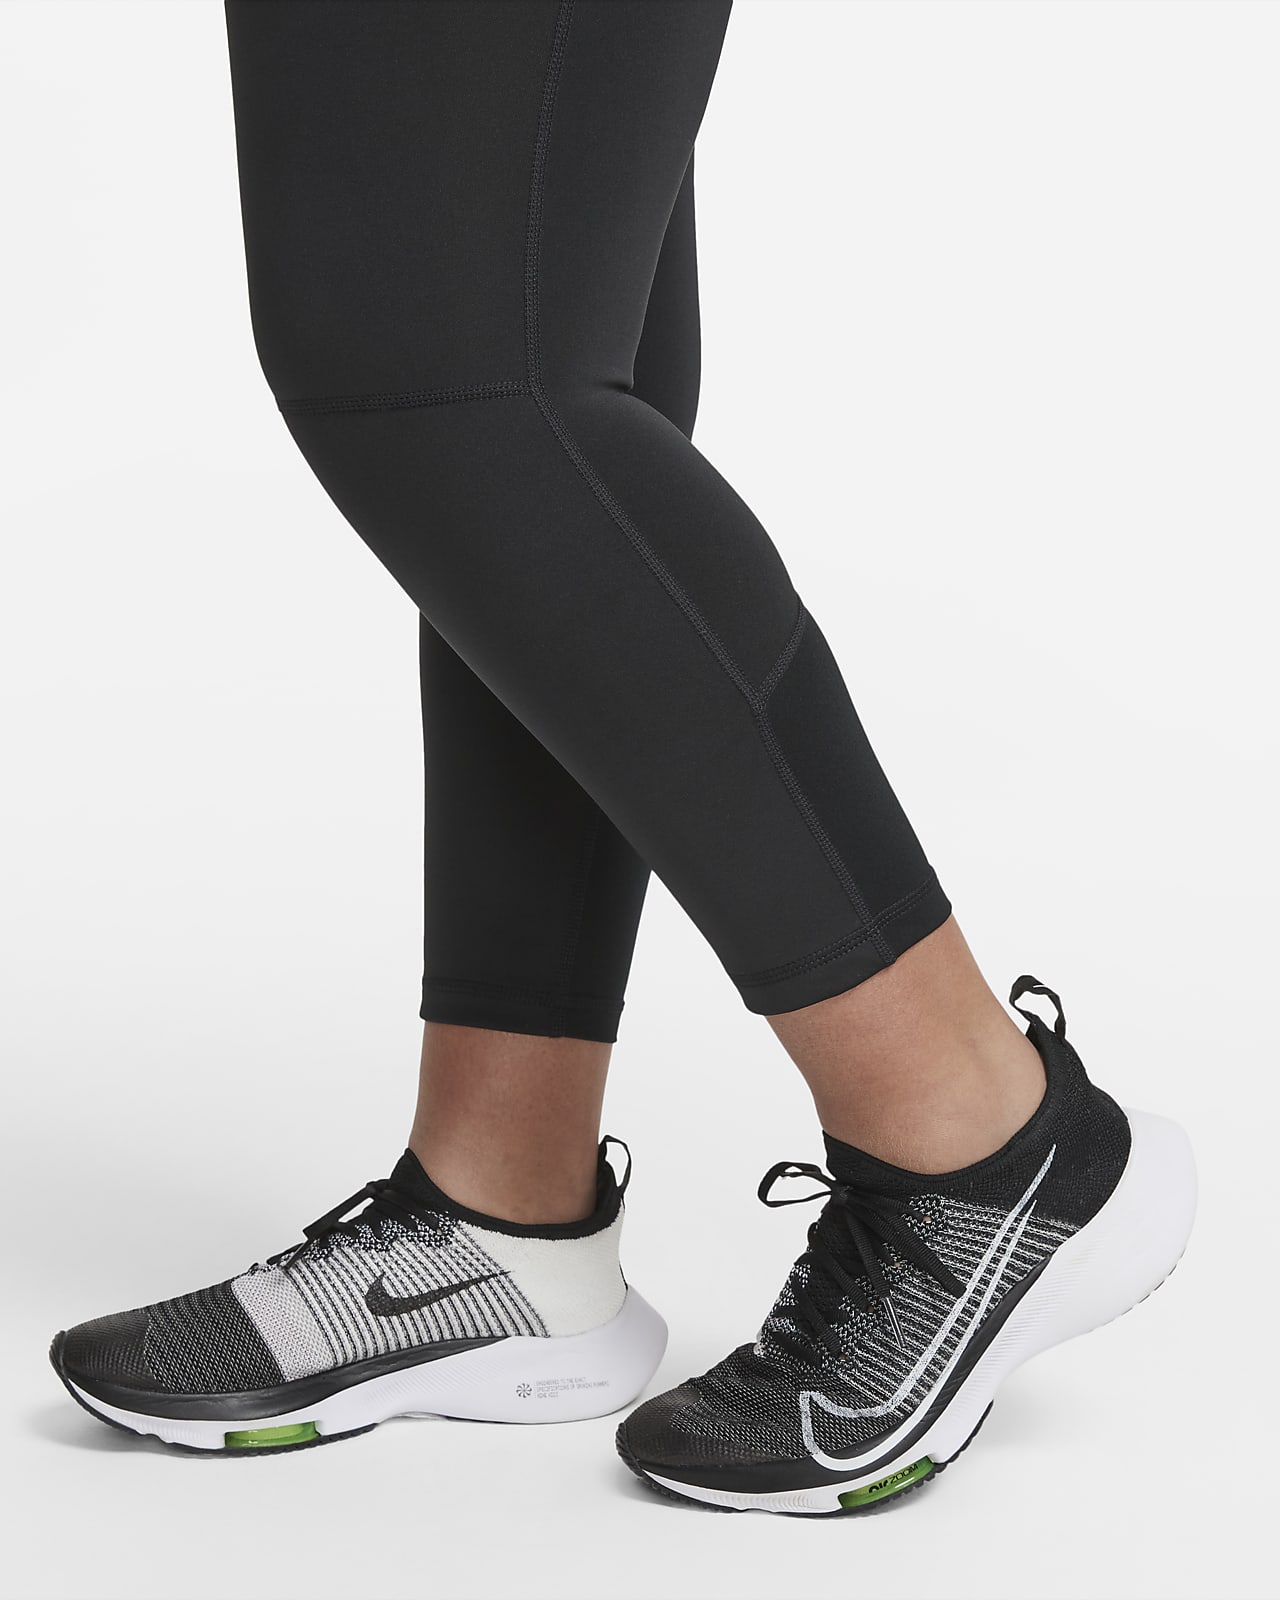 Leggings para niña talla grande (talla extendida) Nike Pro Dri-FIT